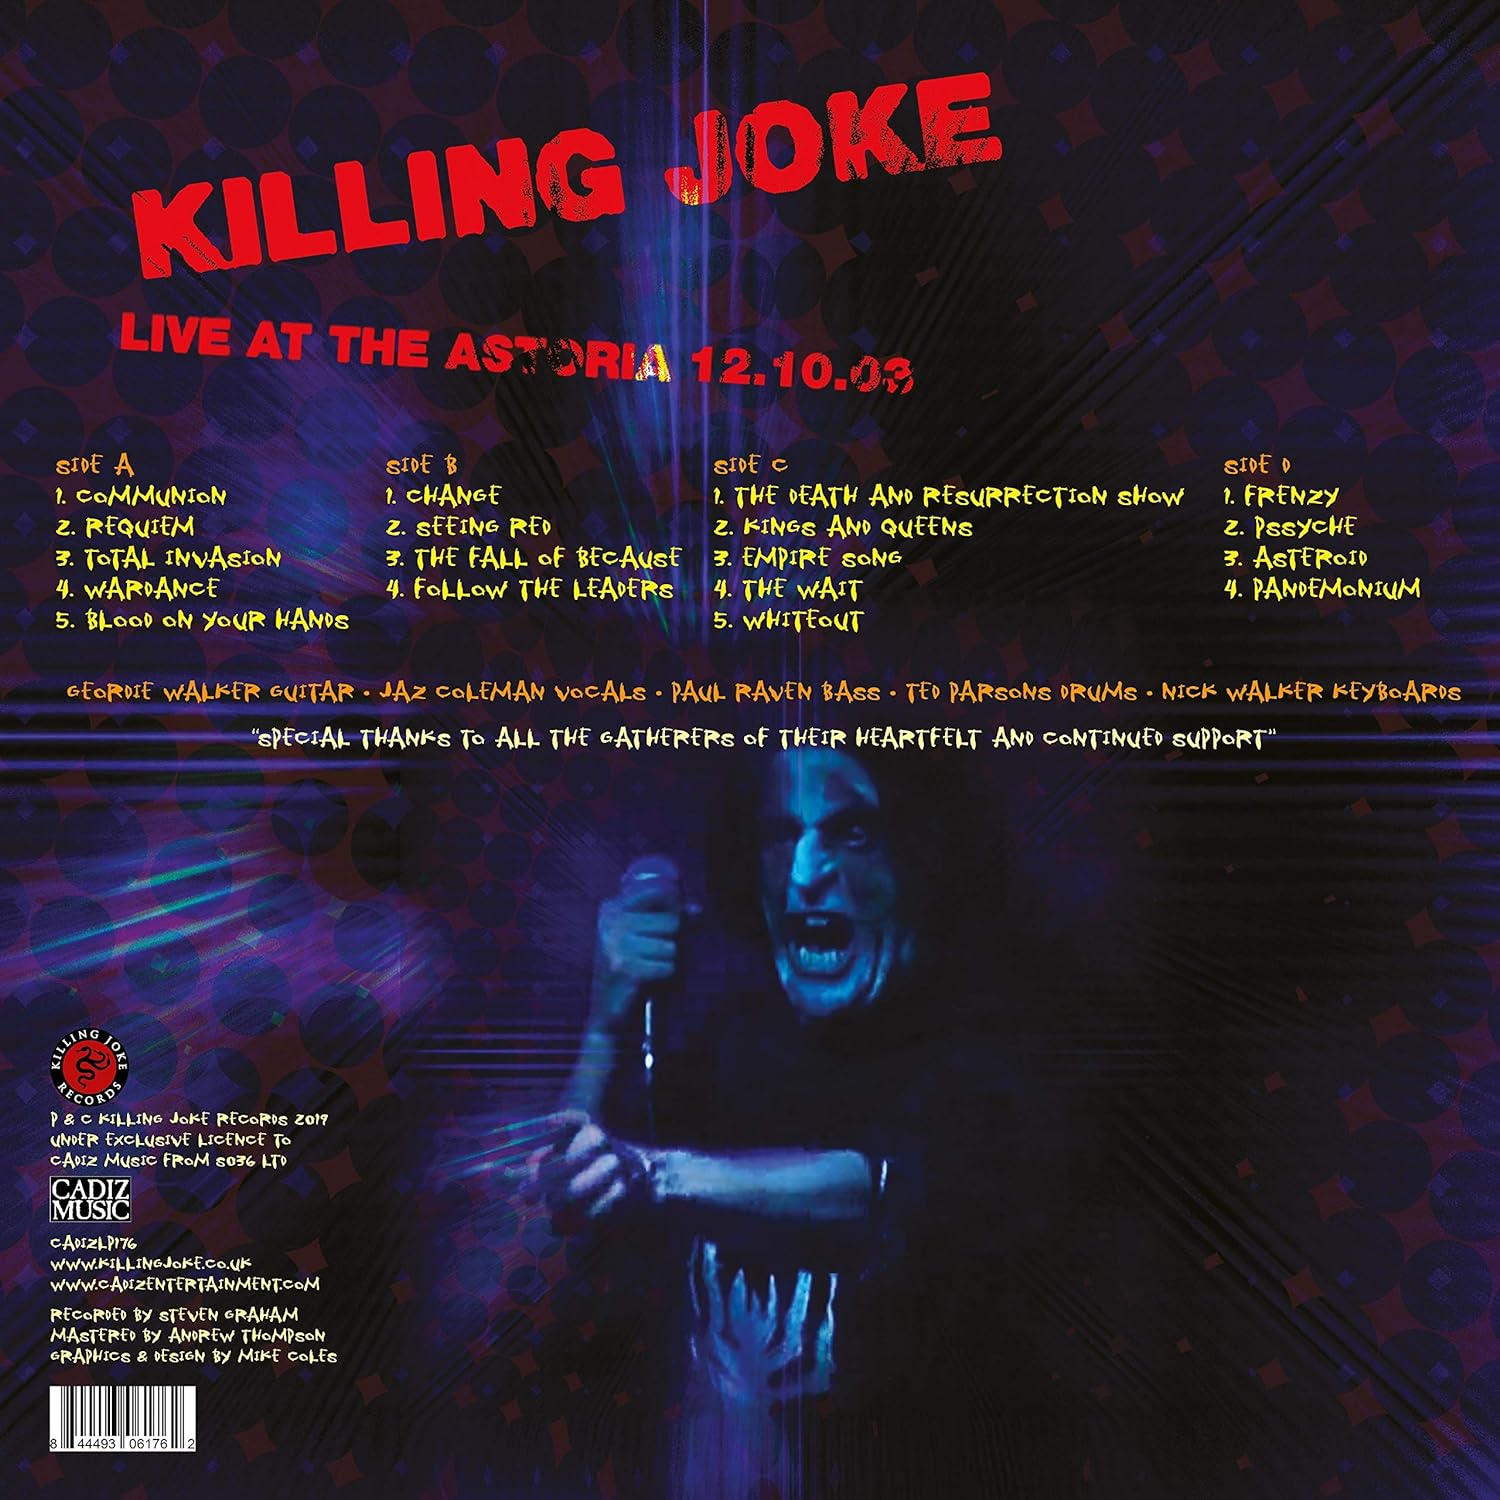 KILLING JOKE – MALICIOUS DAMAGE- LIVE AT THE ASTORIA blue vinyl LP2